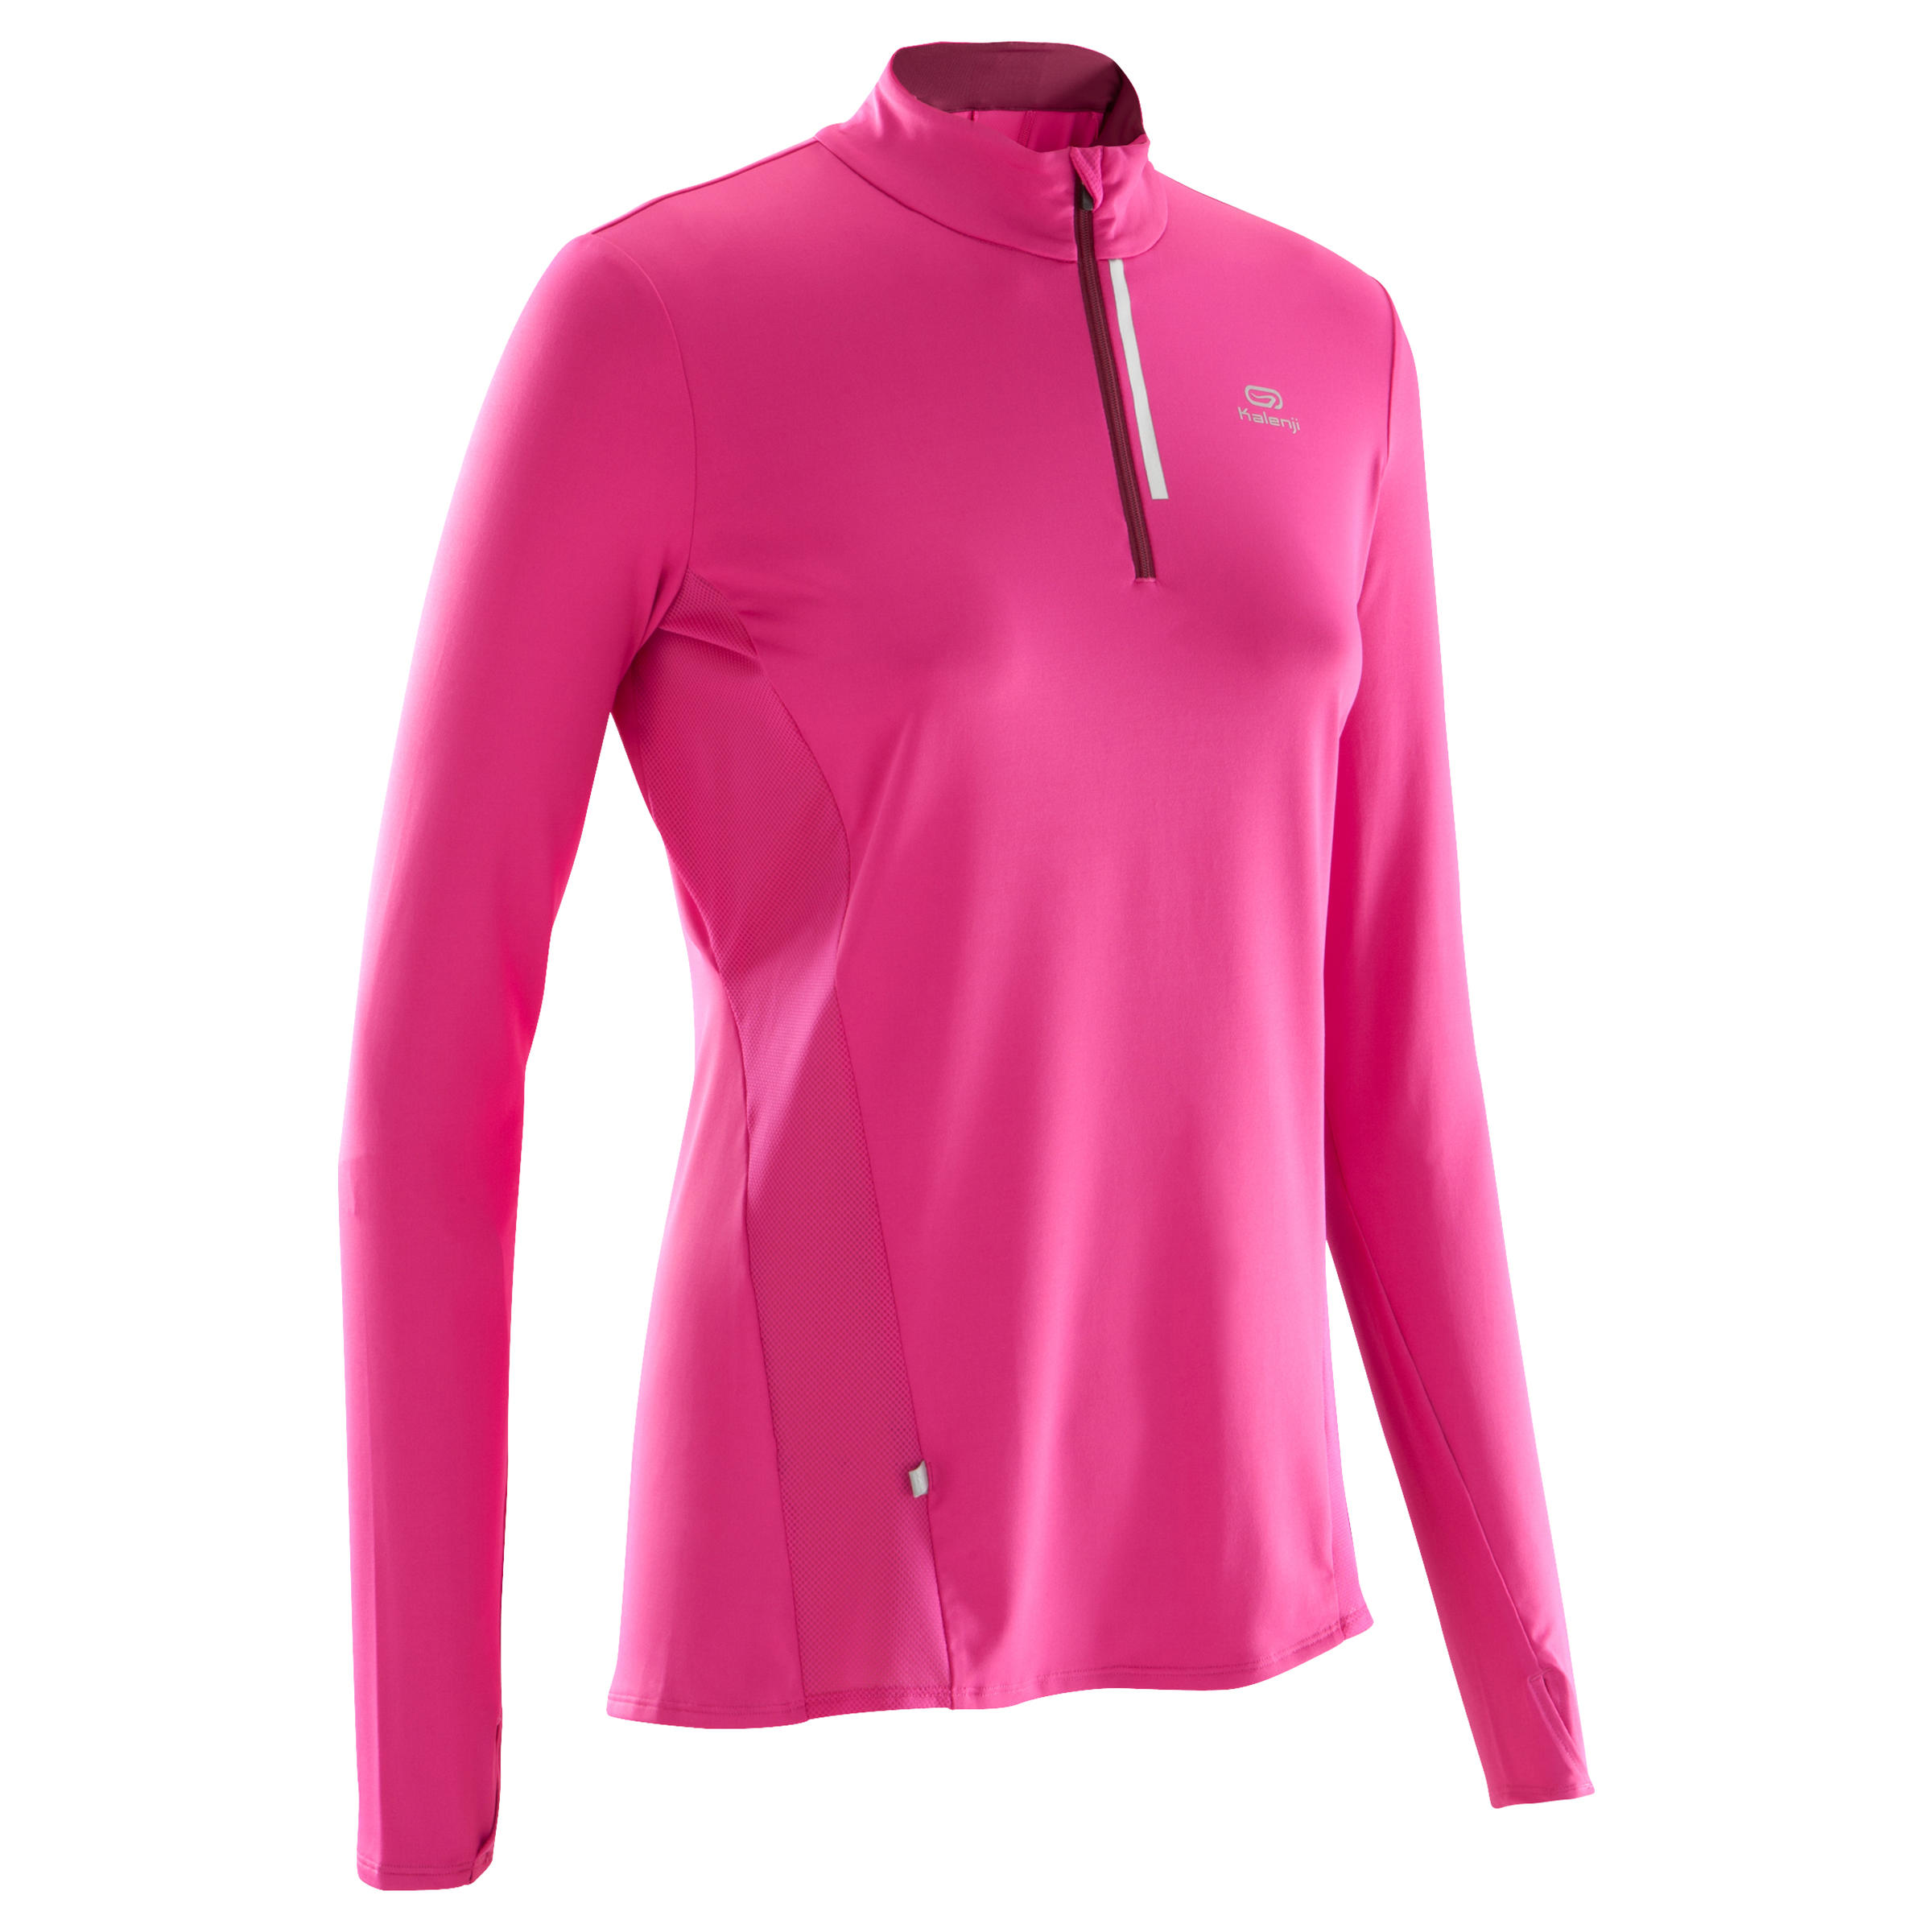 KALENJI Run Dry + Zip Women's Running Long-Sleeved Shirt - Pink